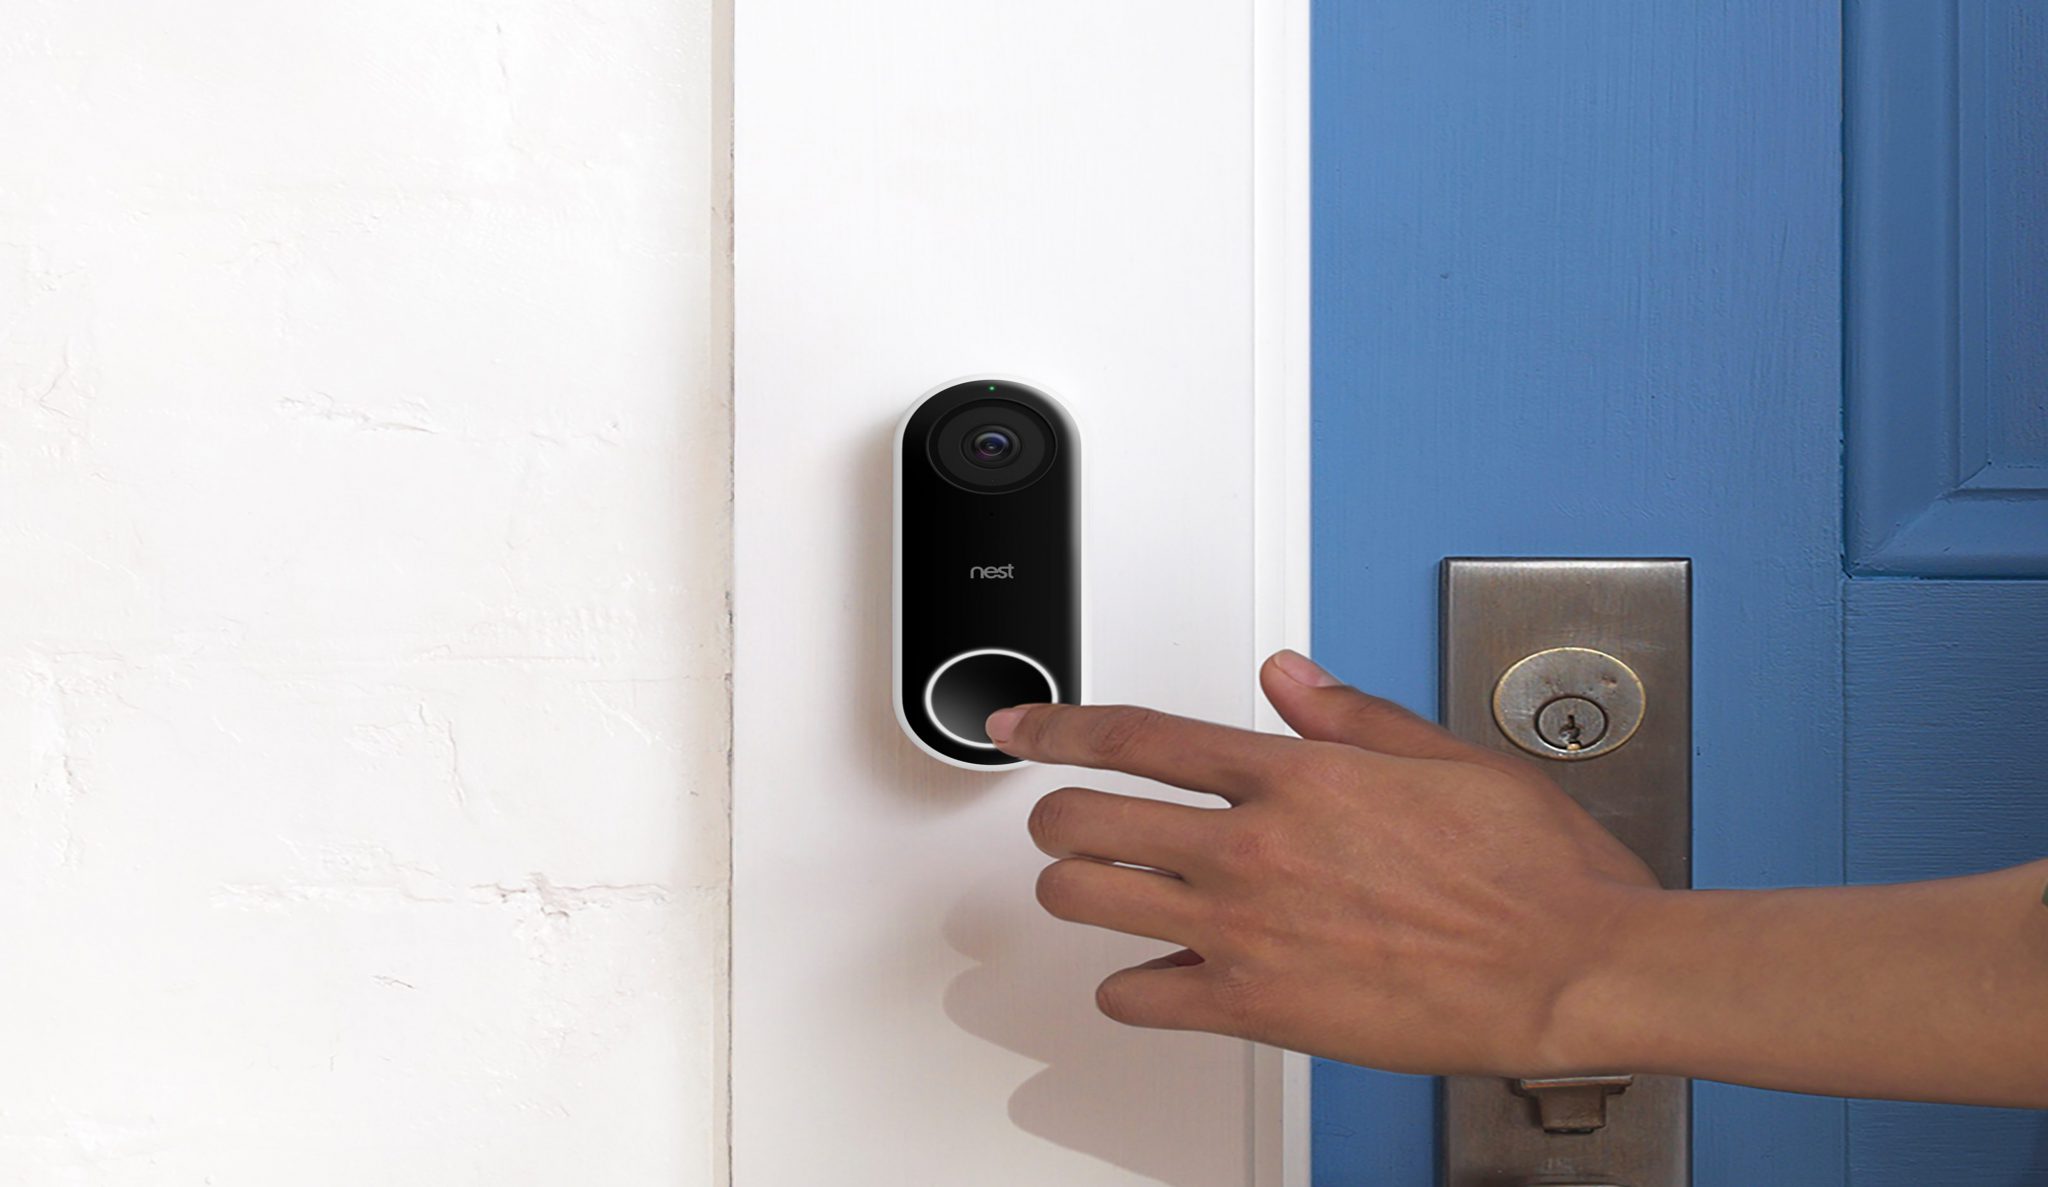 Звонок в квартиру звук. Дверная камера- Nest Doorbell. Звонок в дверь. Камера встроенная в дверной звонок. Звонок в квартиру.